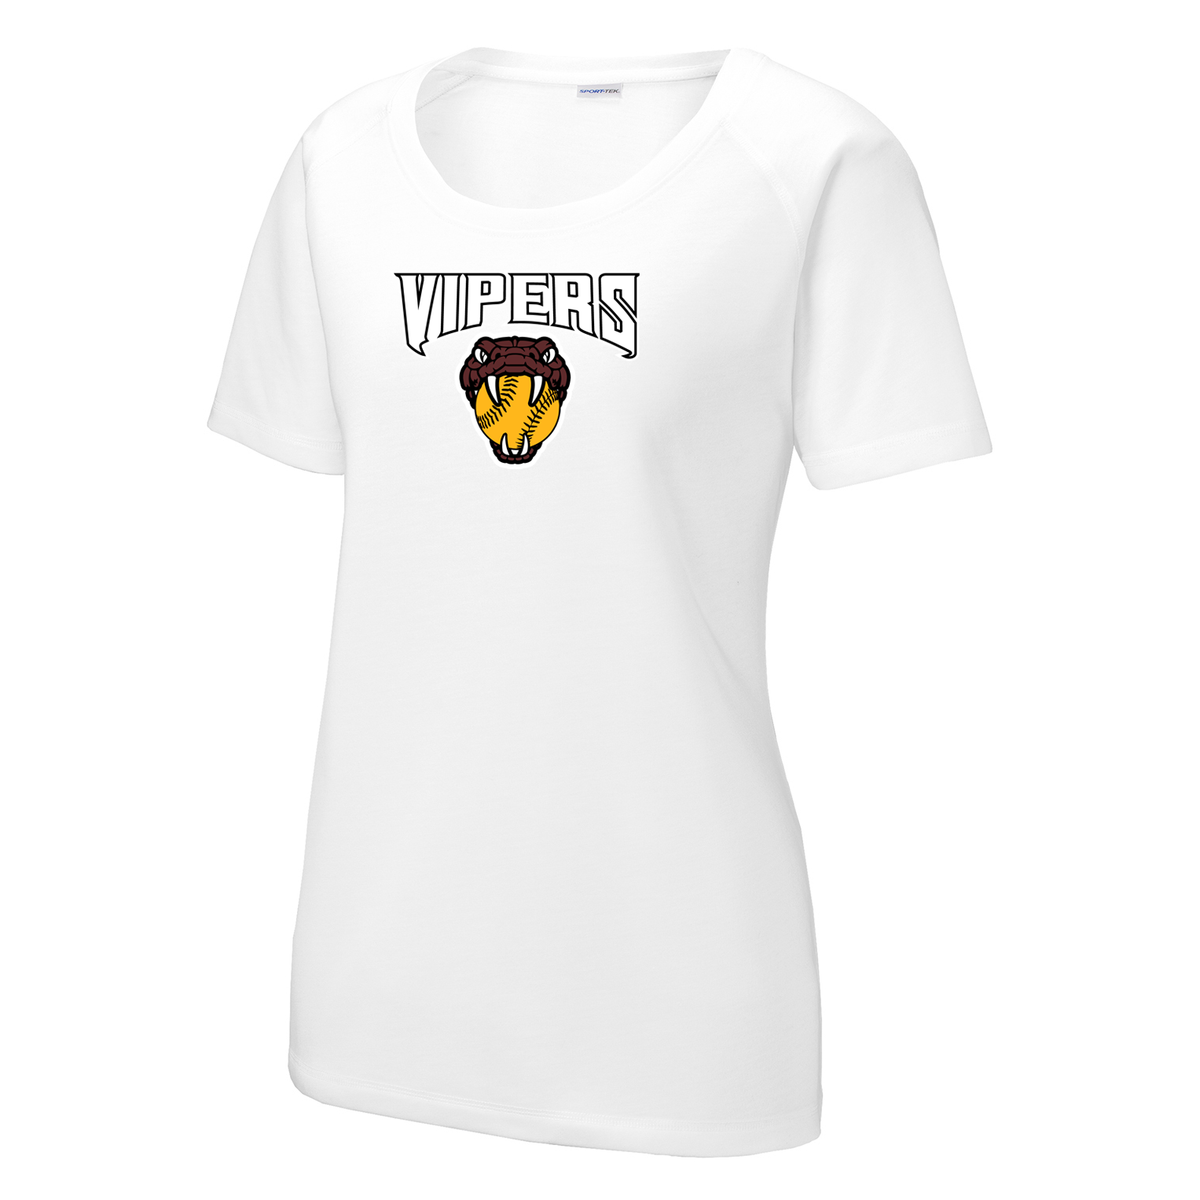 Vipers Softball Women's Raglan CottonTouch